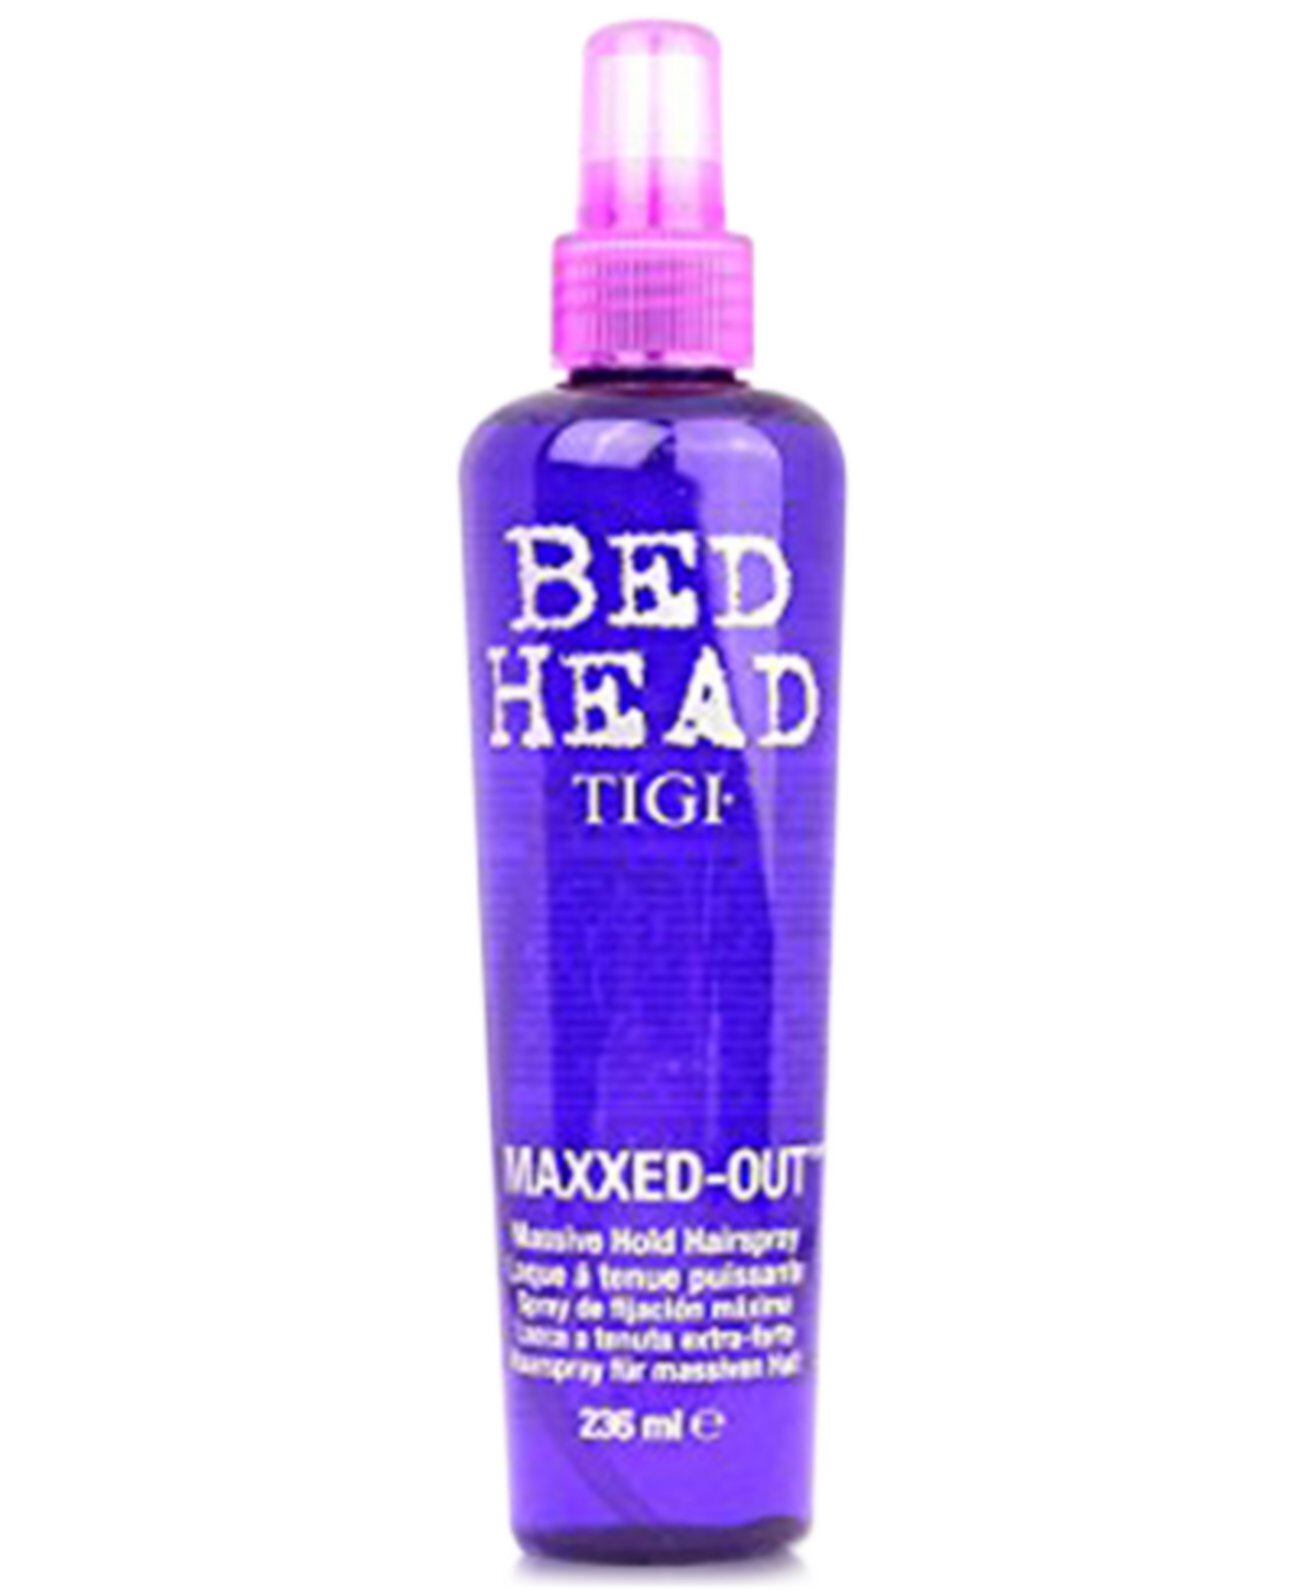 Bed Head Maxxed-Out, 8 унций, от PUREBEAUTY Salon & Spa TIGI